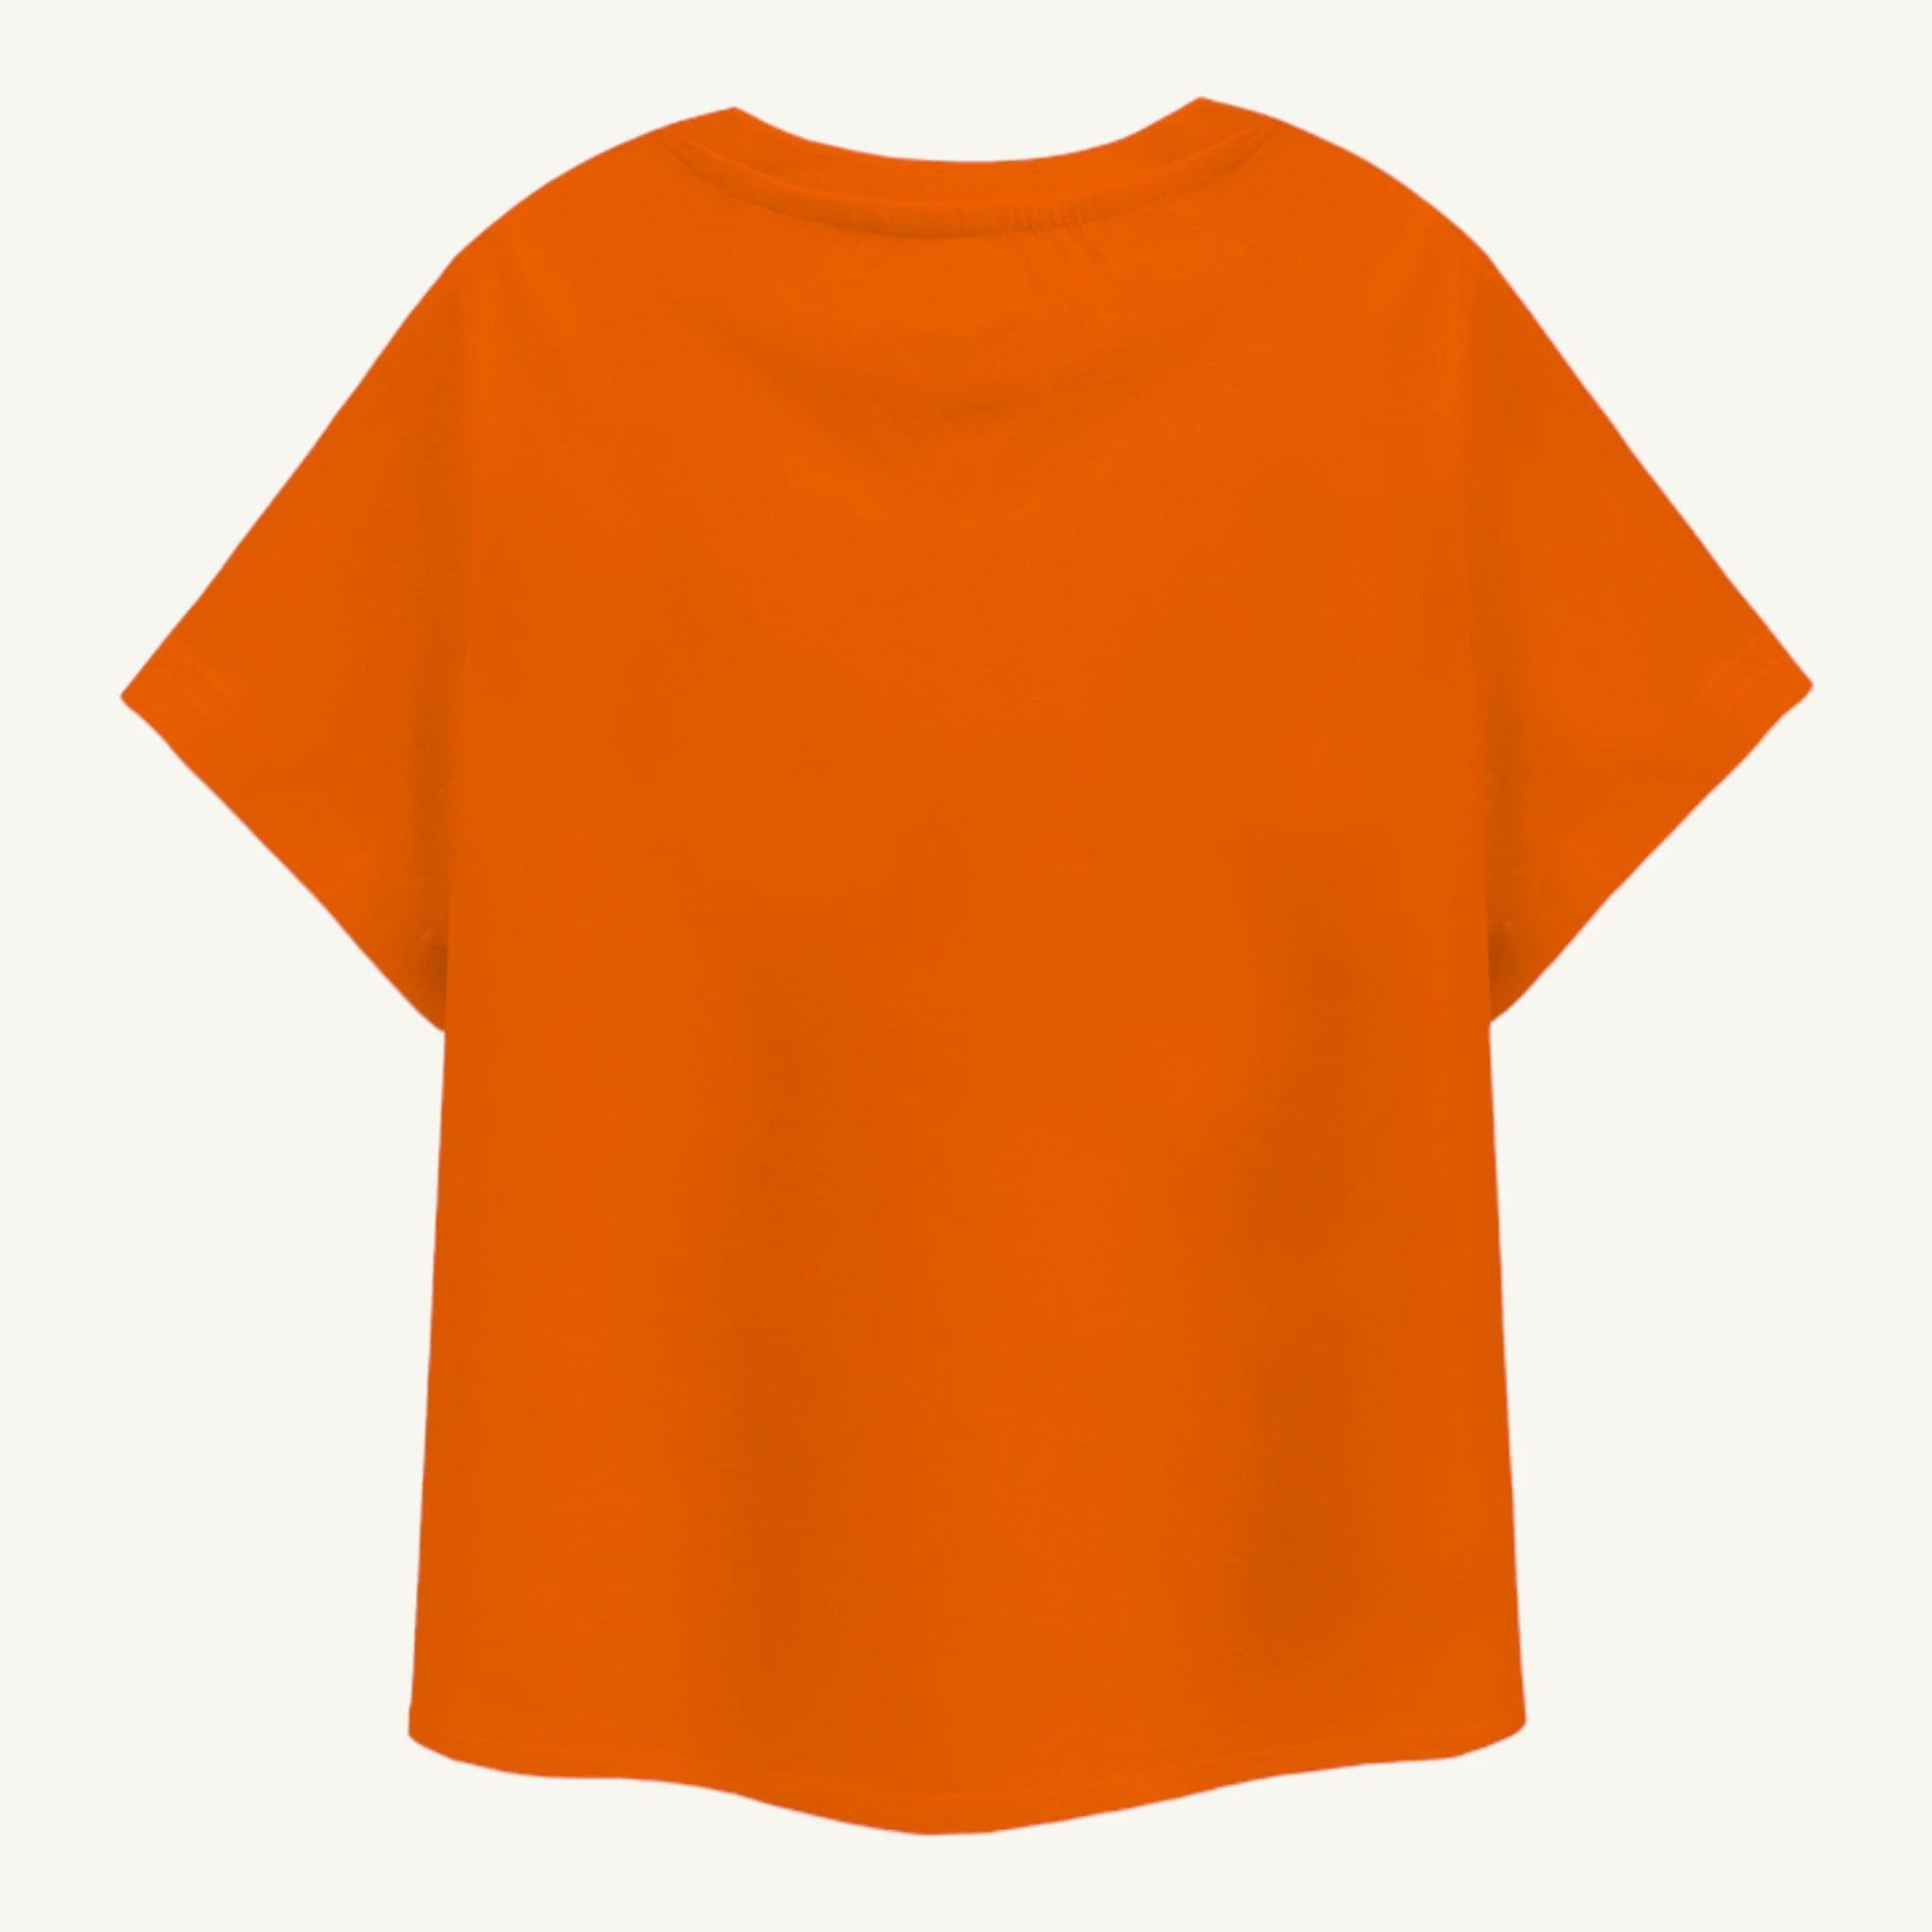 Girls Let's Oversize T-shirt - Orange - Guugly Wuugly